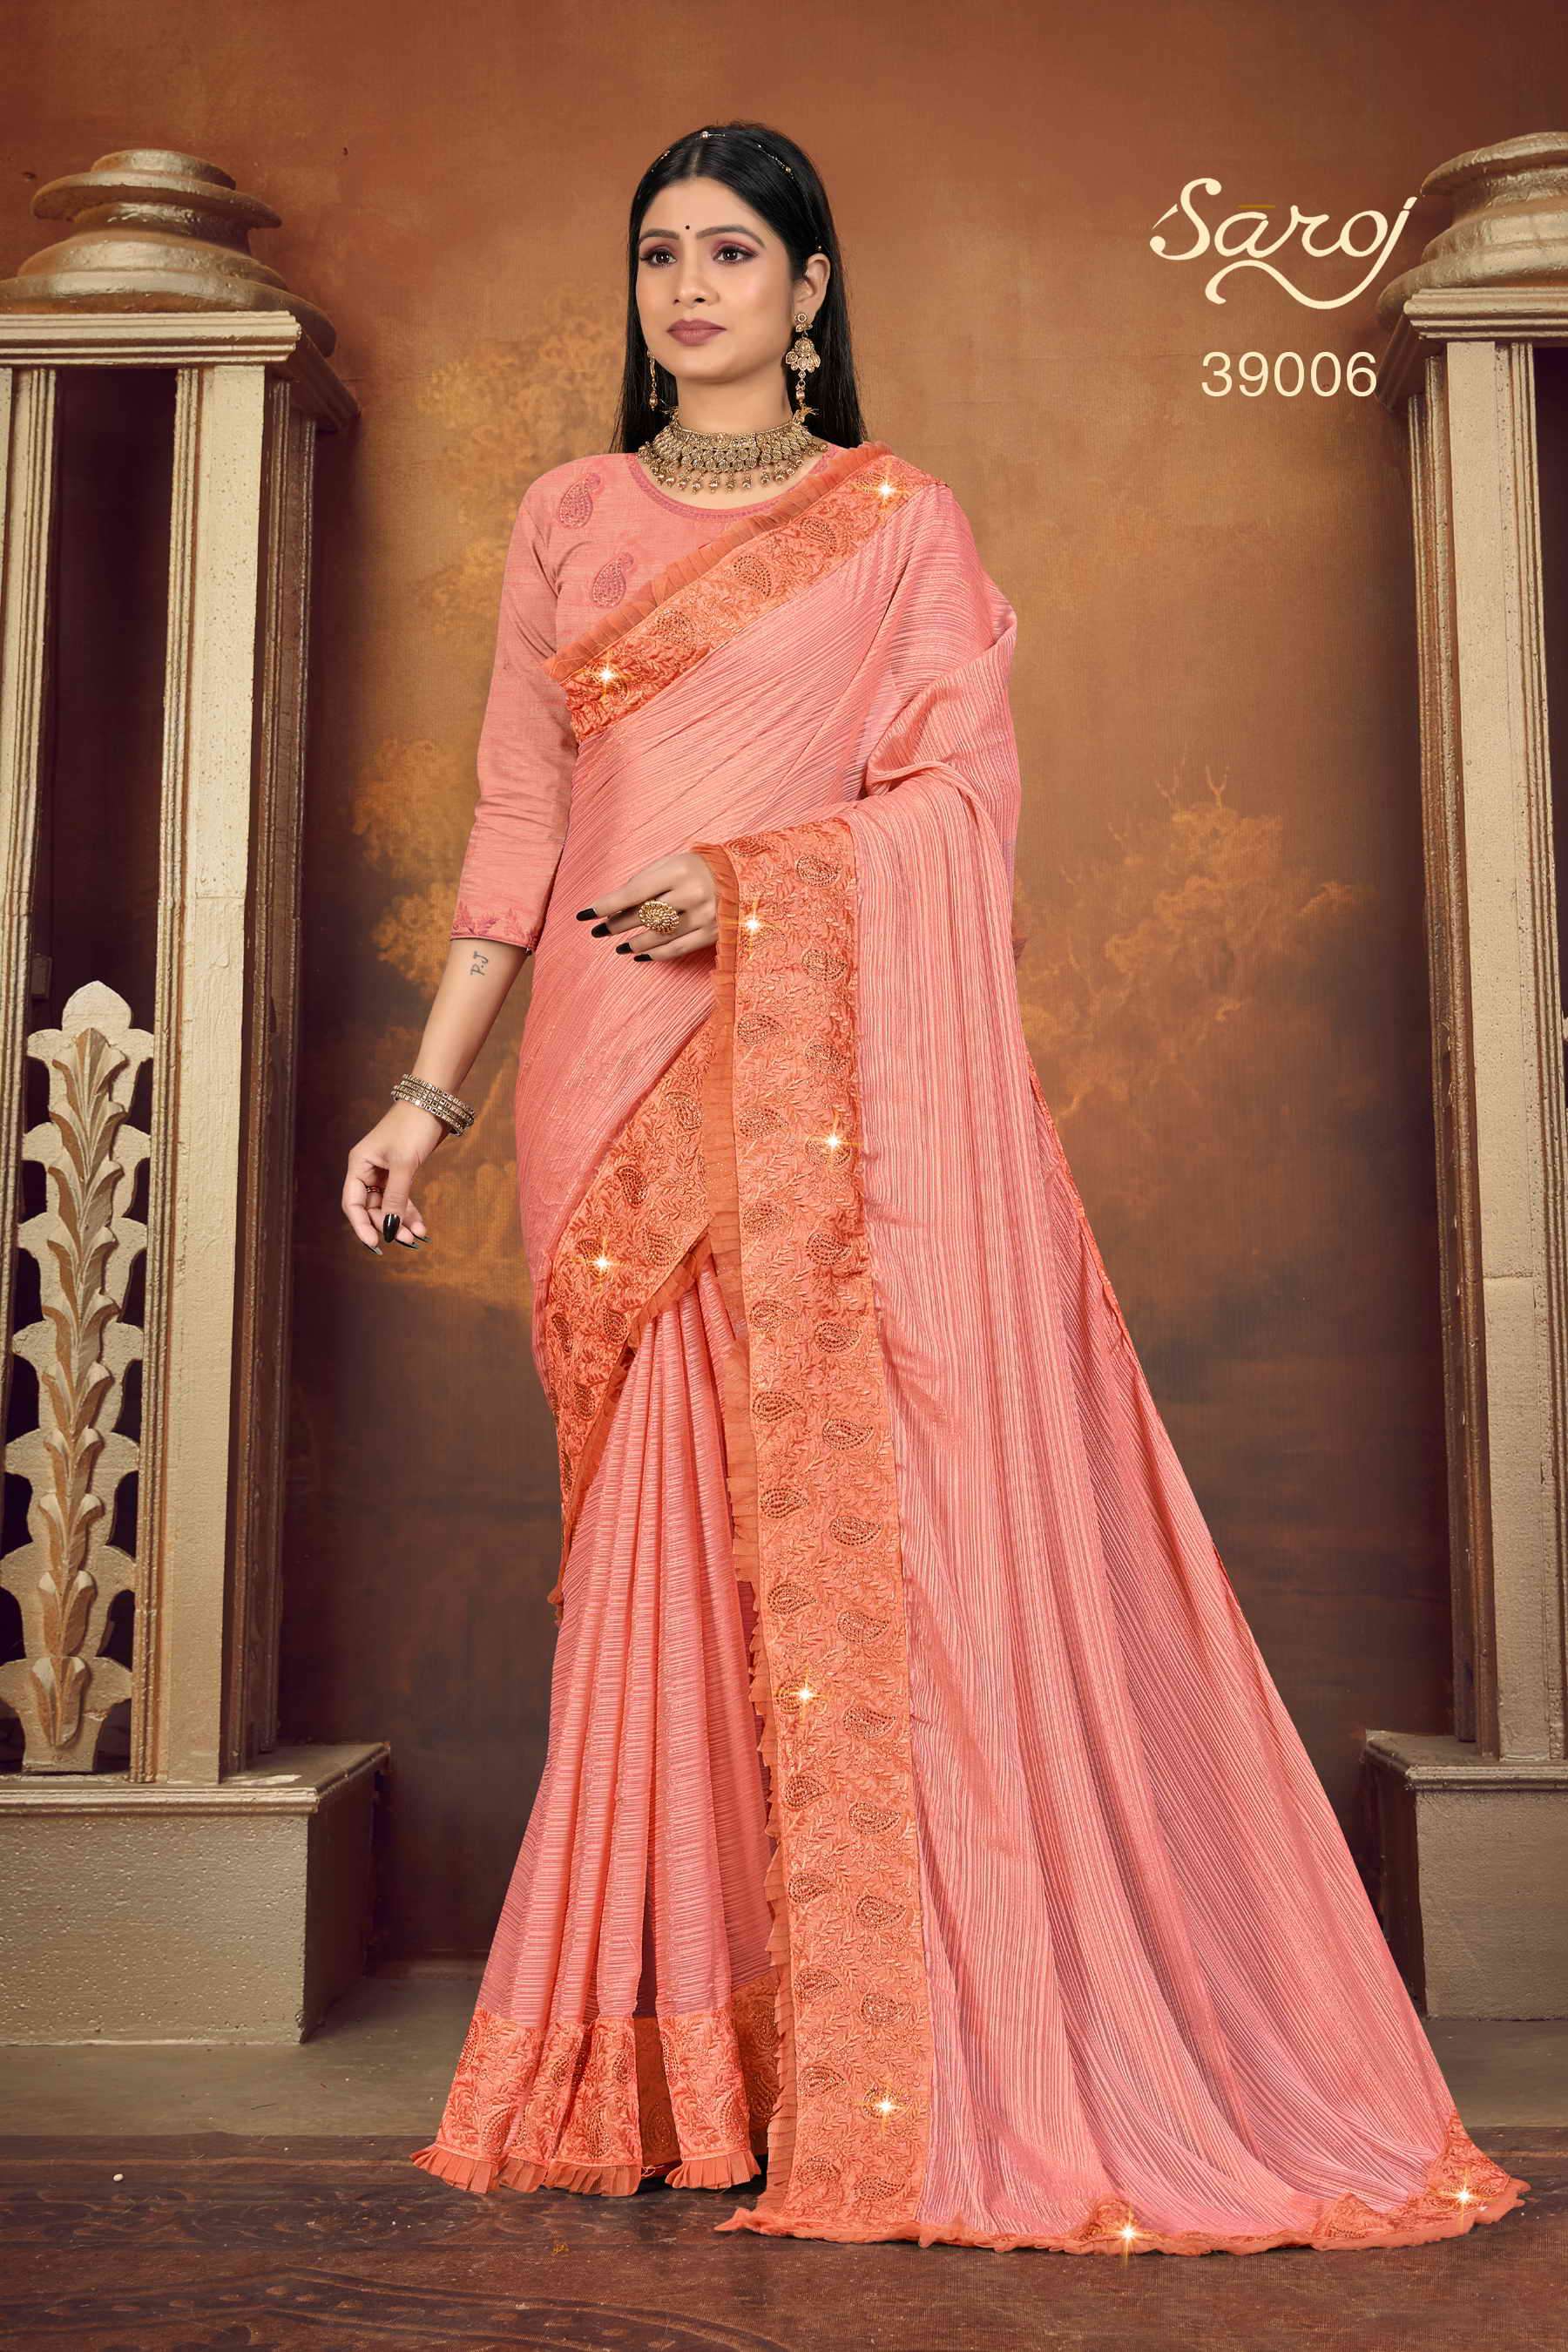 Saroj textile presents Saathiya Designer sarees catalogue